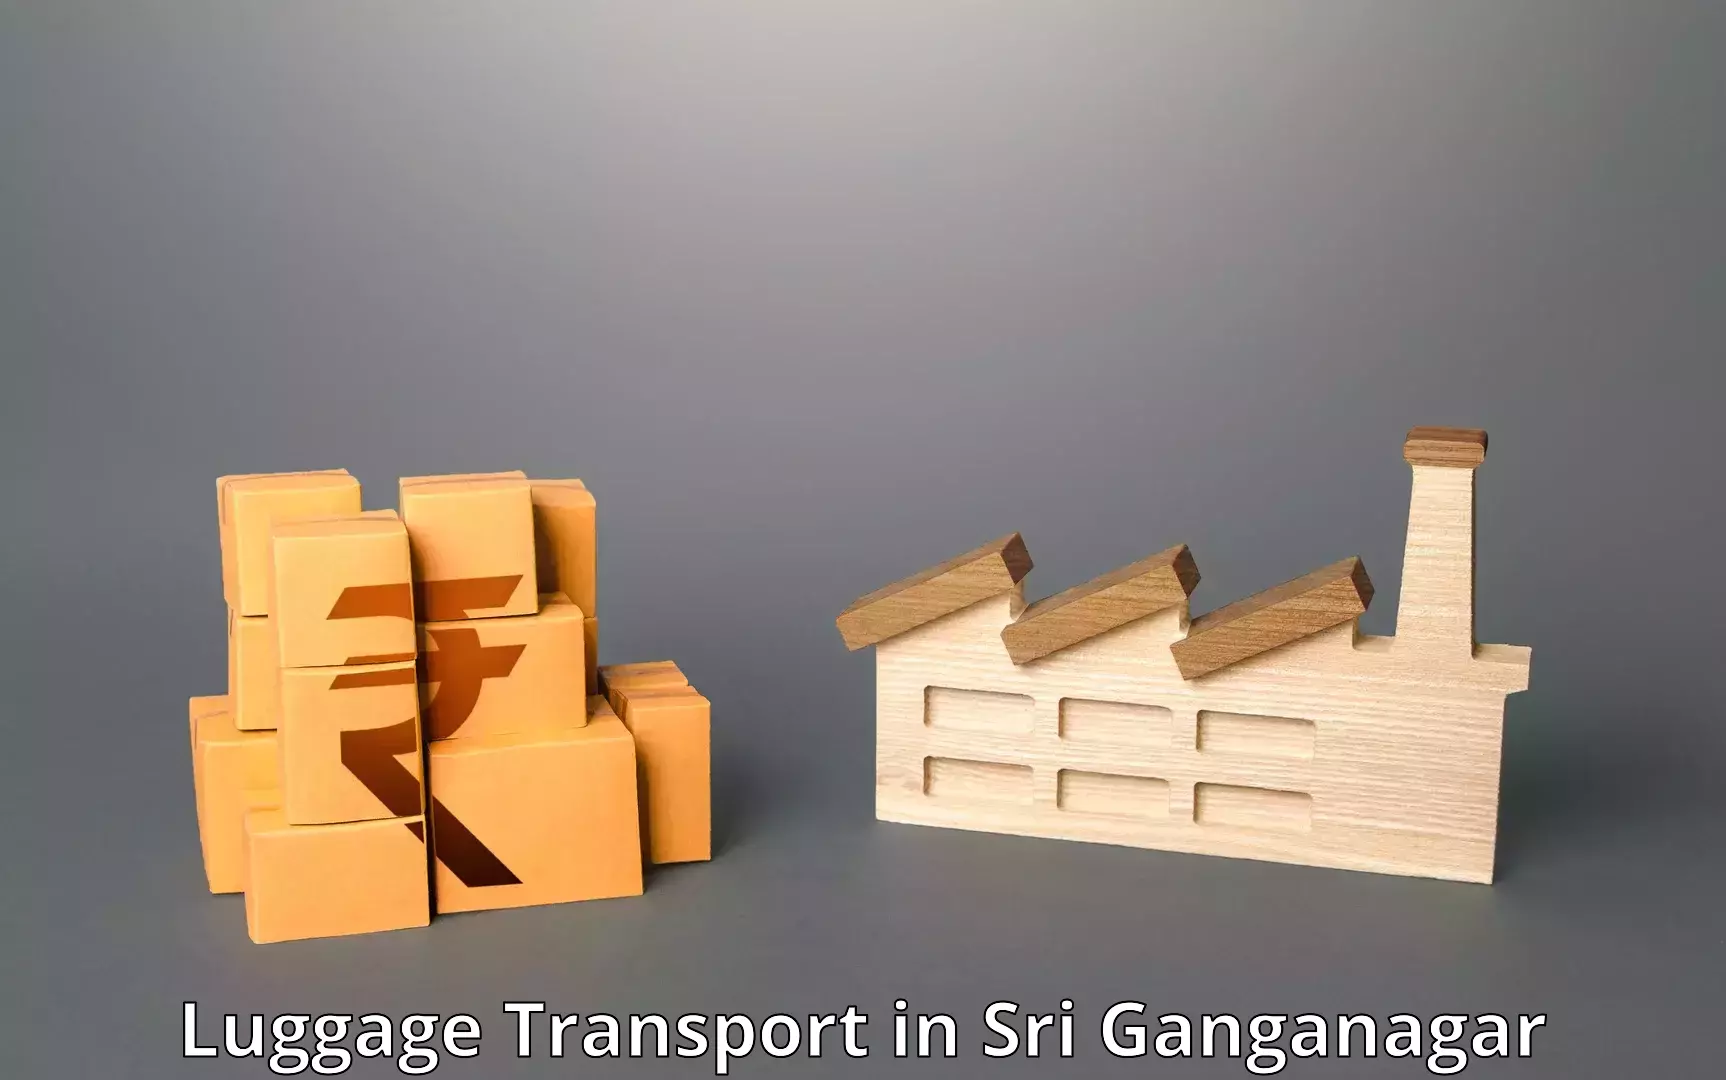 Baggage handling services in Sri Ganganagar